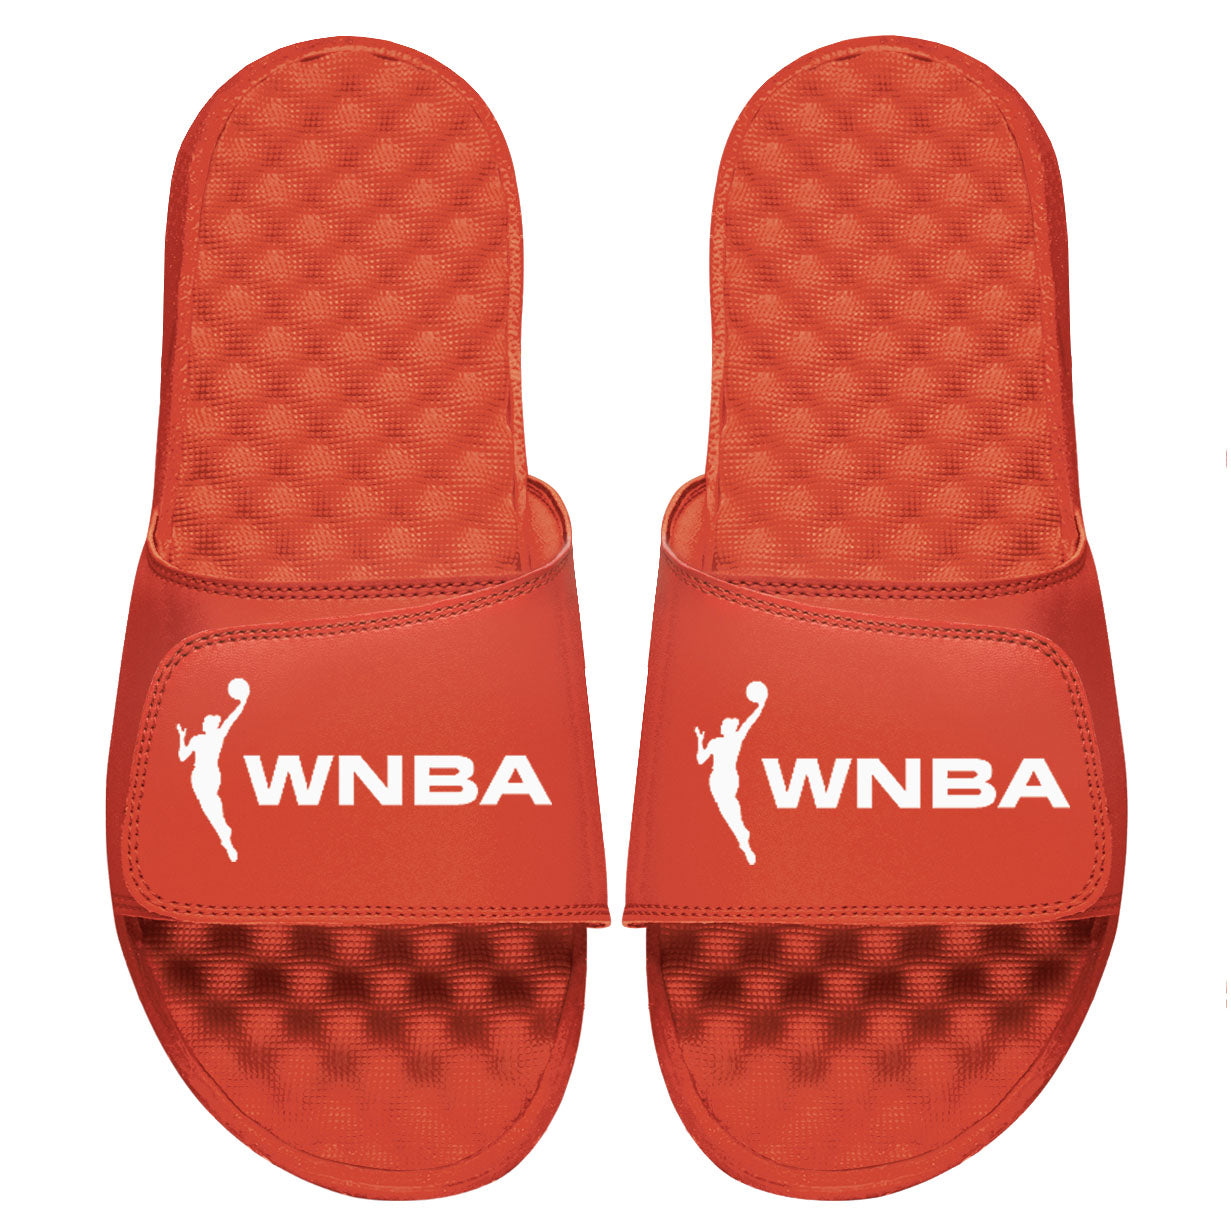 WNBA Wordmark Slides